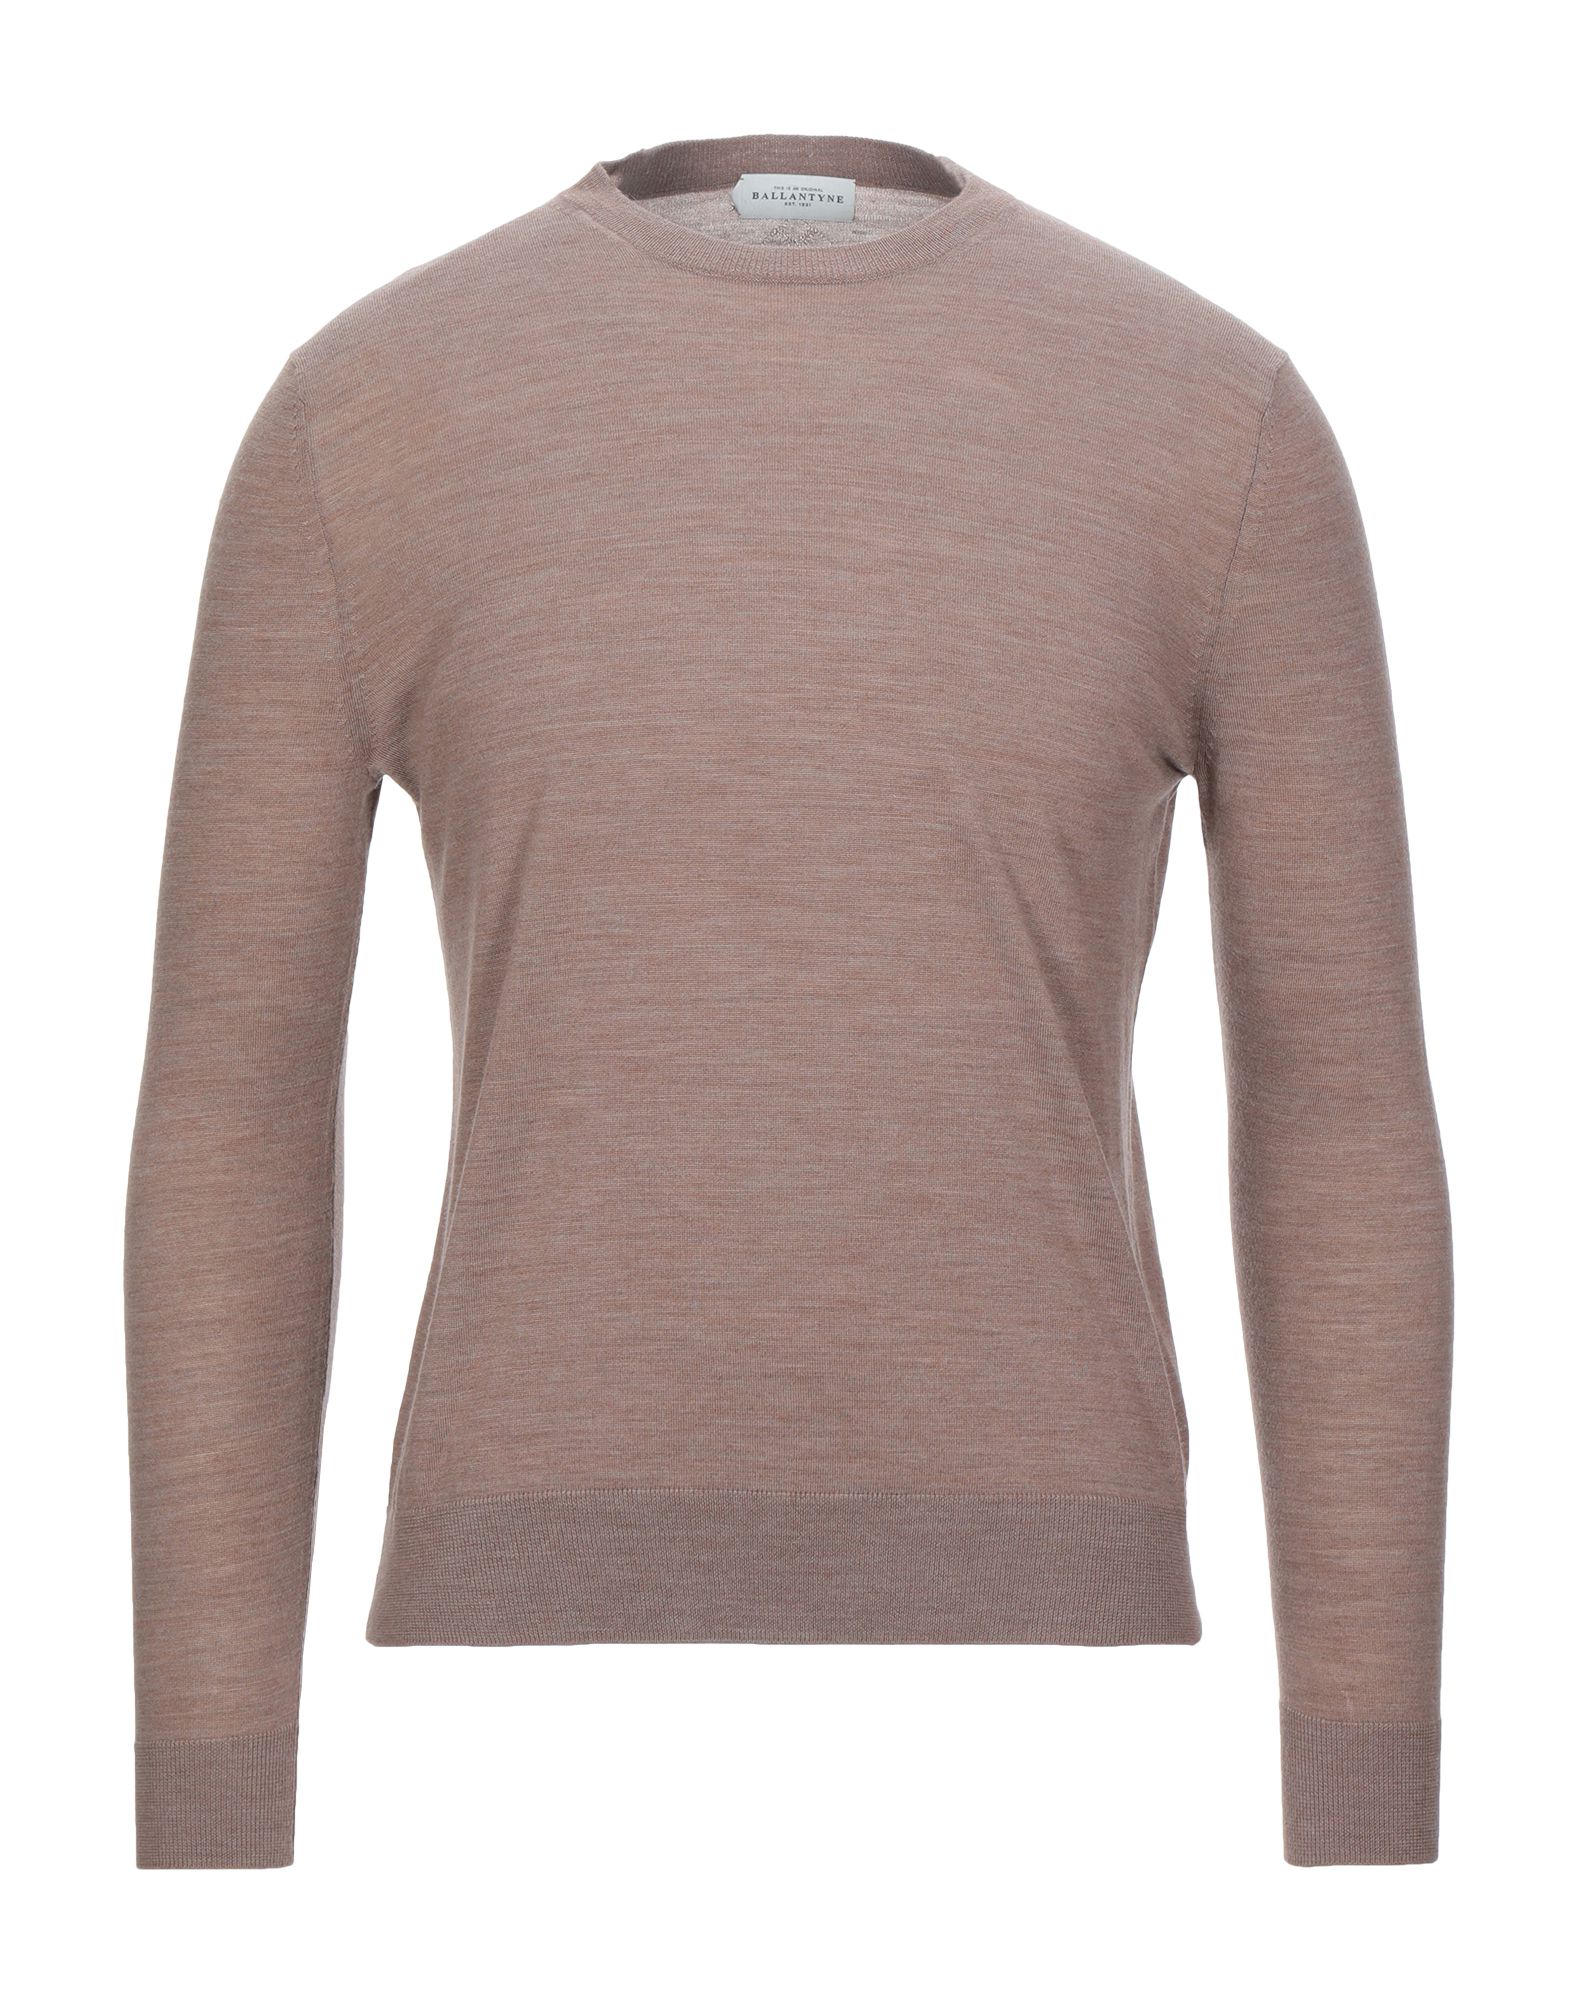 BALLANTYNE Sweaters - Item 14046001